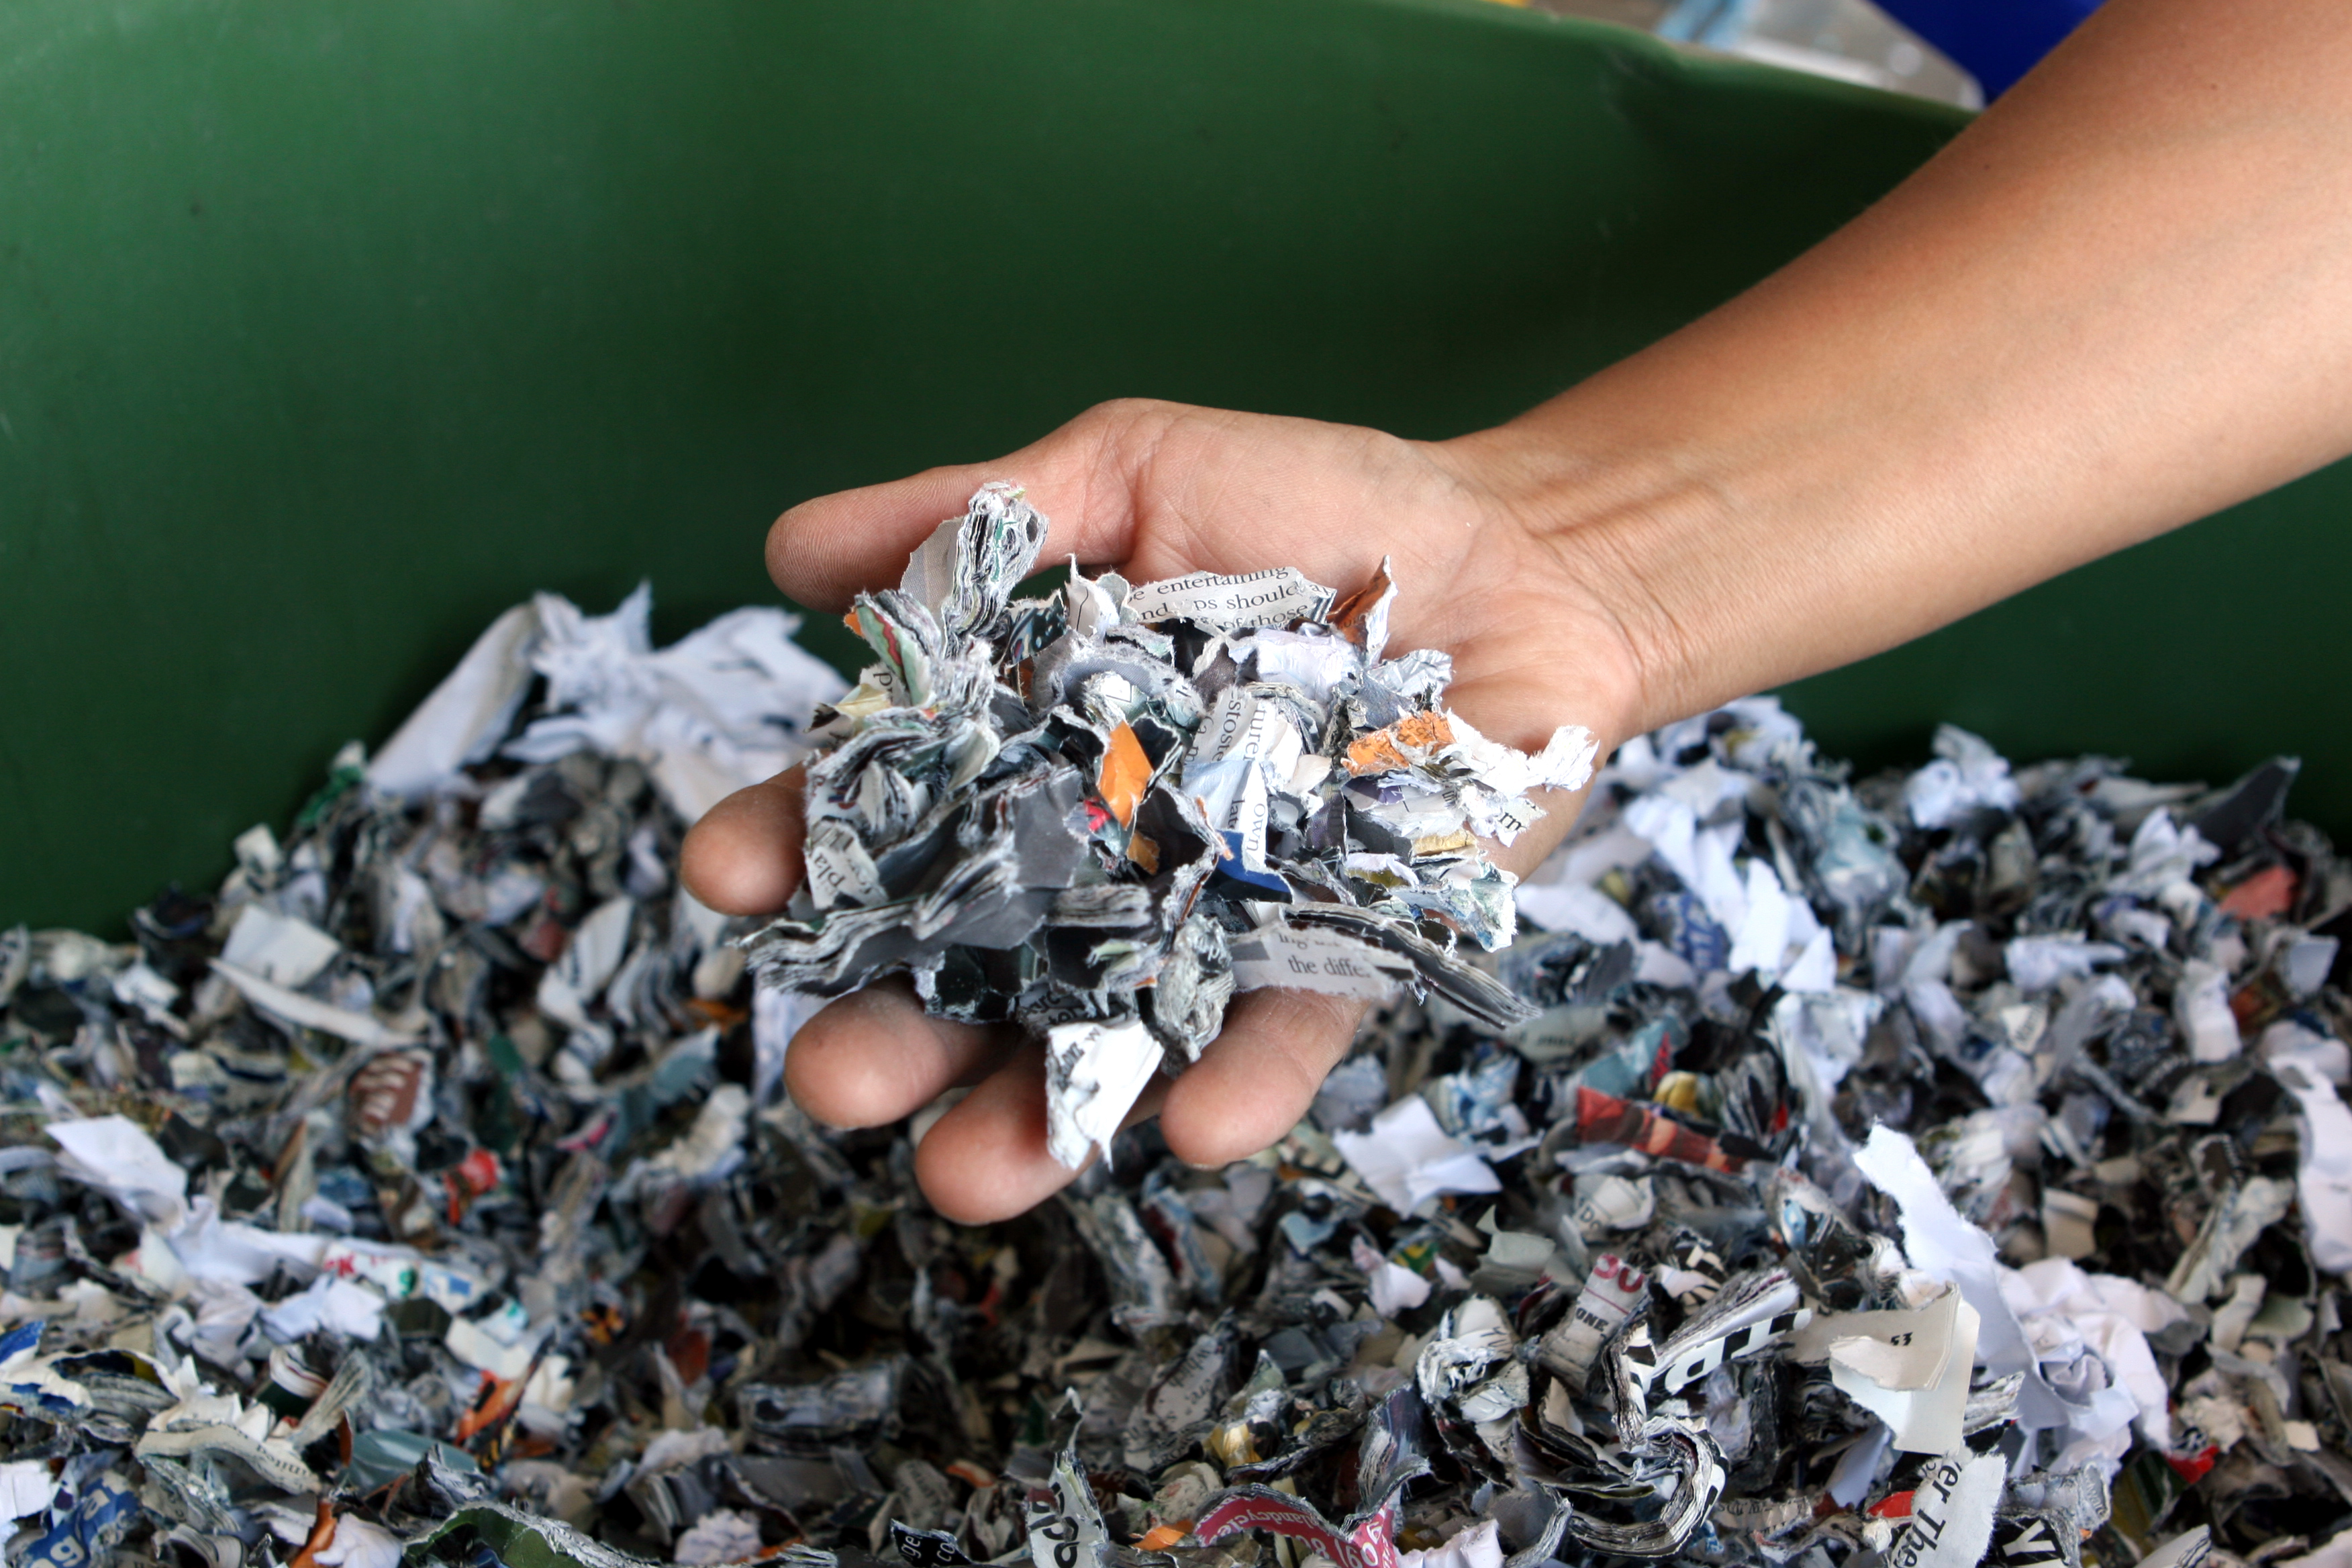 papershredding TechWaste Recycling Inc.